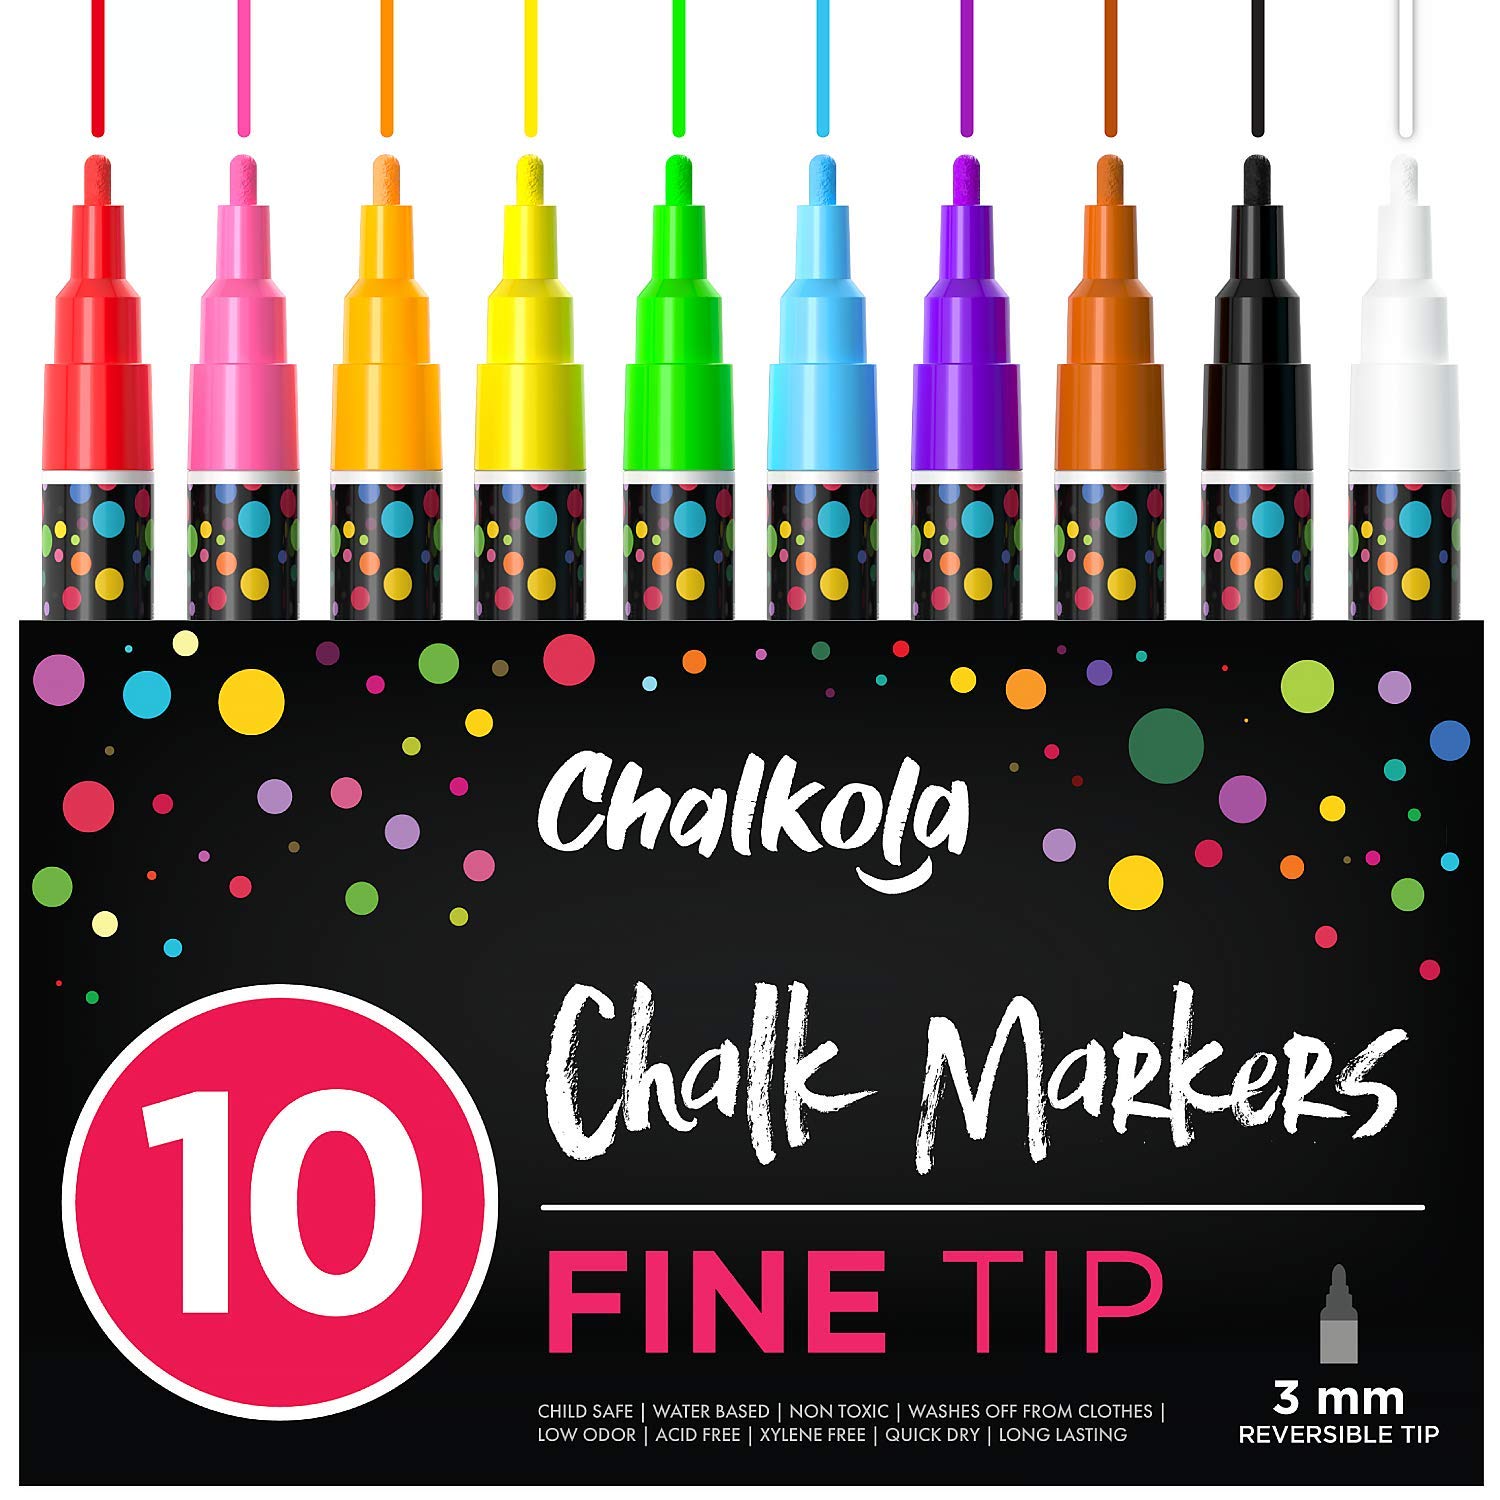 Bundle: Acrylic Paint Pens - 6 White + 6 Black + 40 Multi-Color - Chalkola  Art Supply